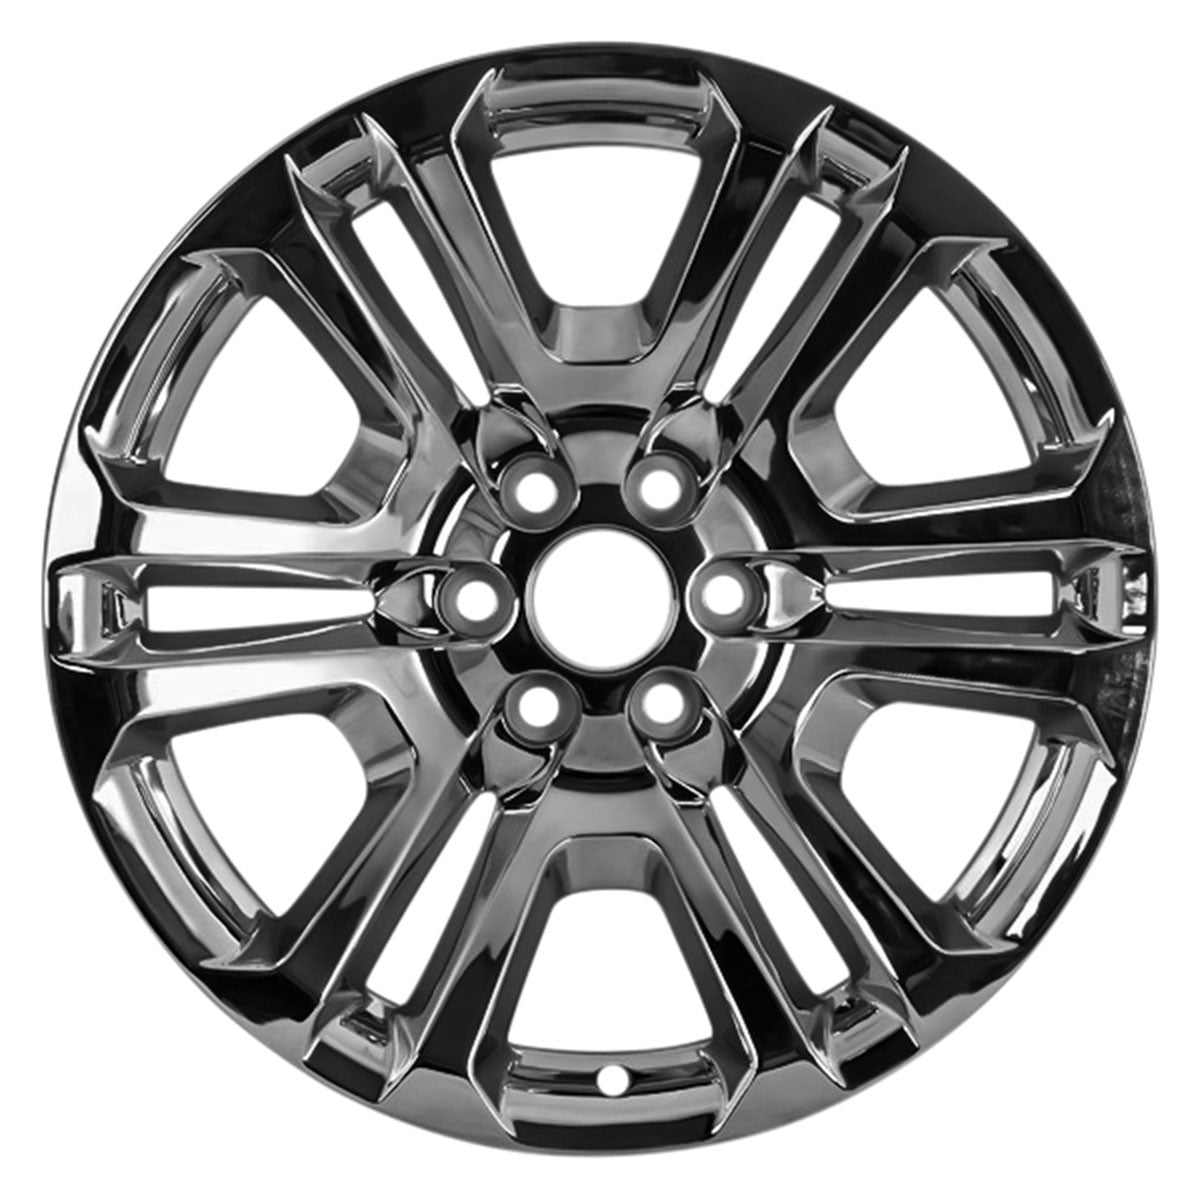 2014 Chevrolet Silverado 1500 22" OEM Wheel Rim W4741CHR